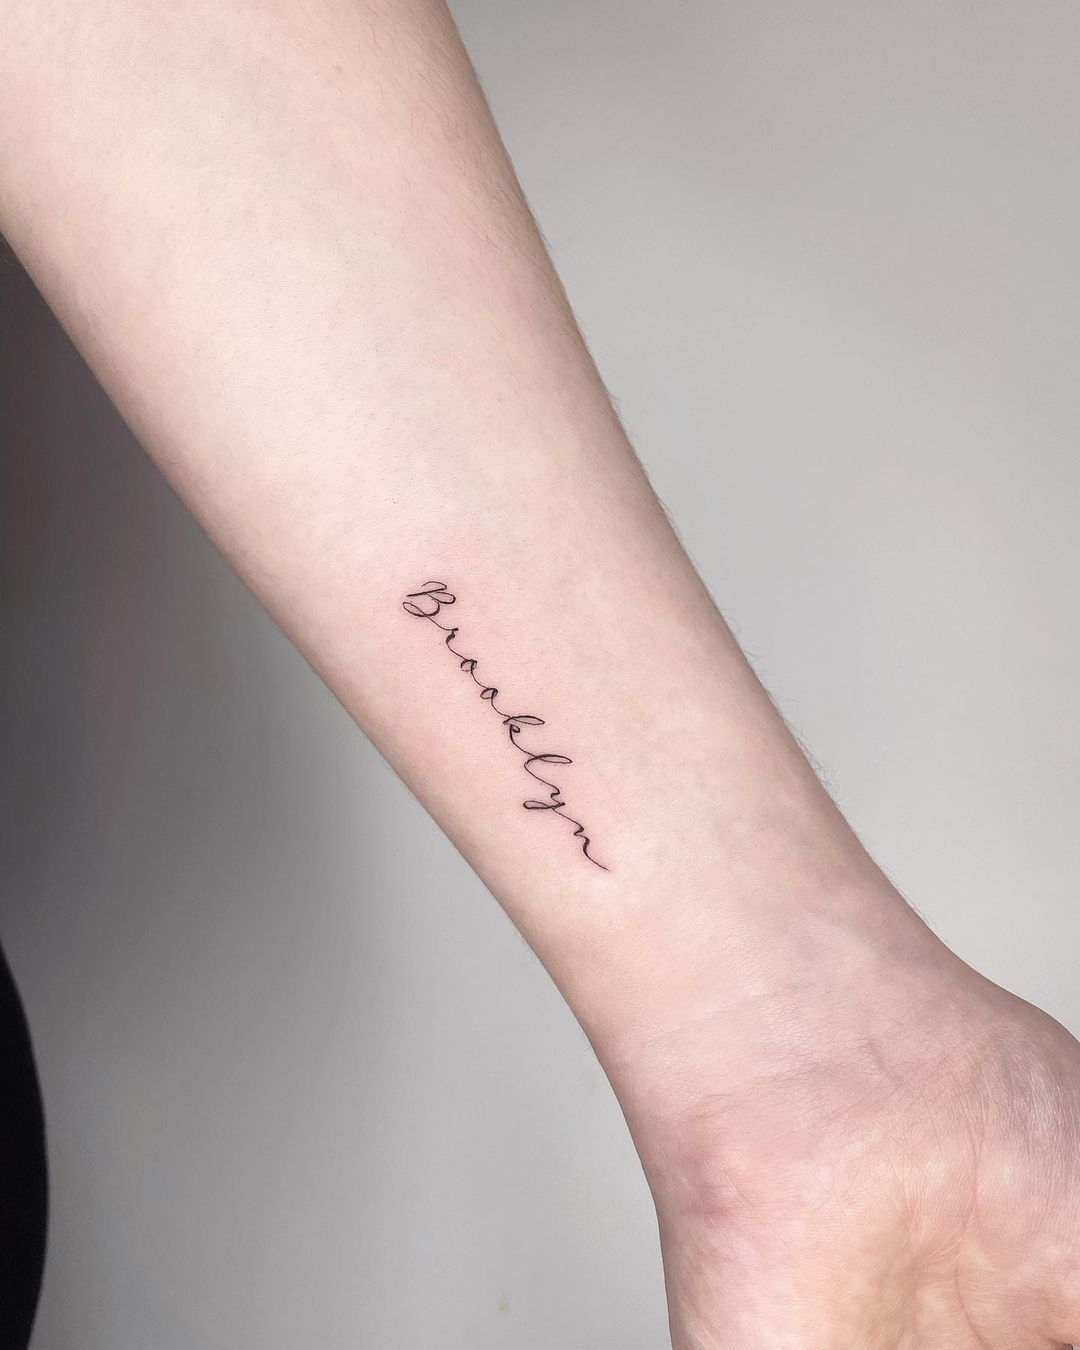 How Wispy Handwriting Made Their Way Into Tattoos